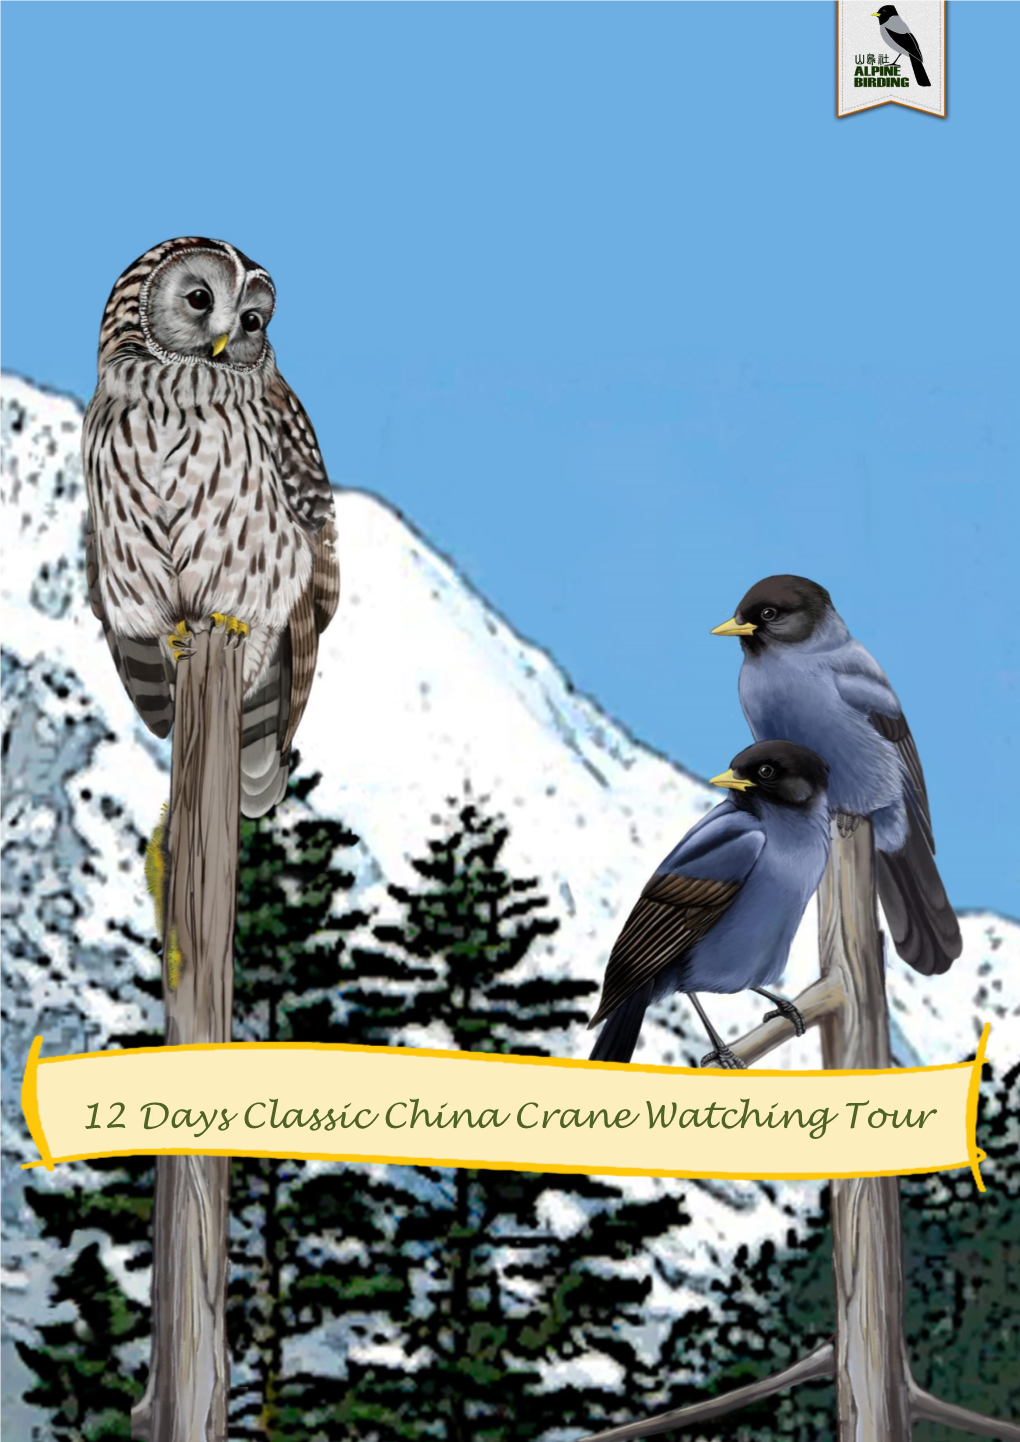 12 Days Classic China Crane Watching Tour